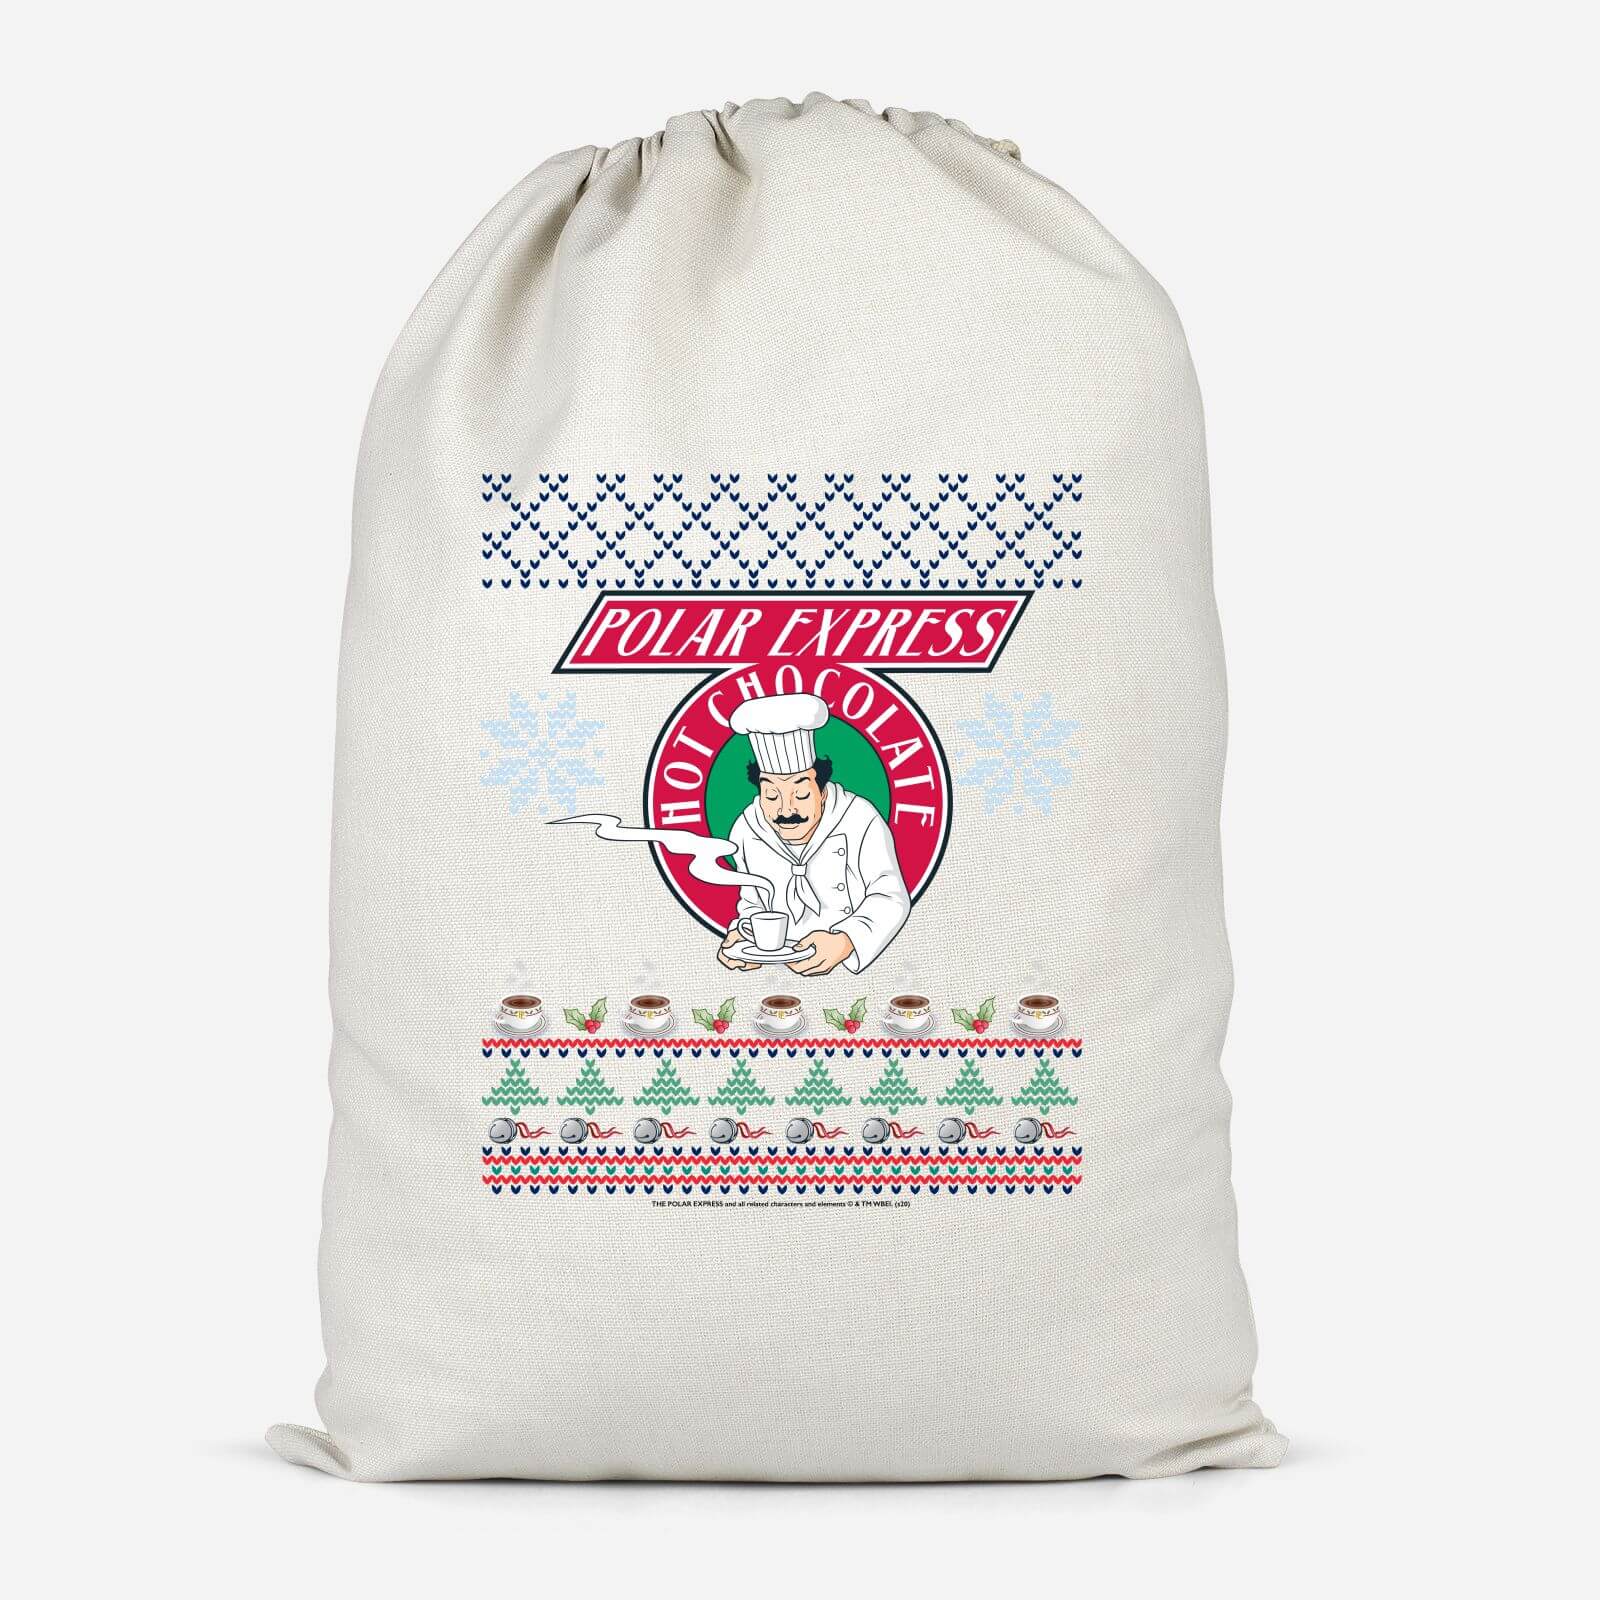 The Polar Express Hot Chocolate Cotton Storage Bag - Small